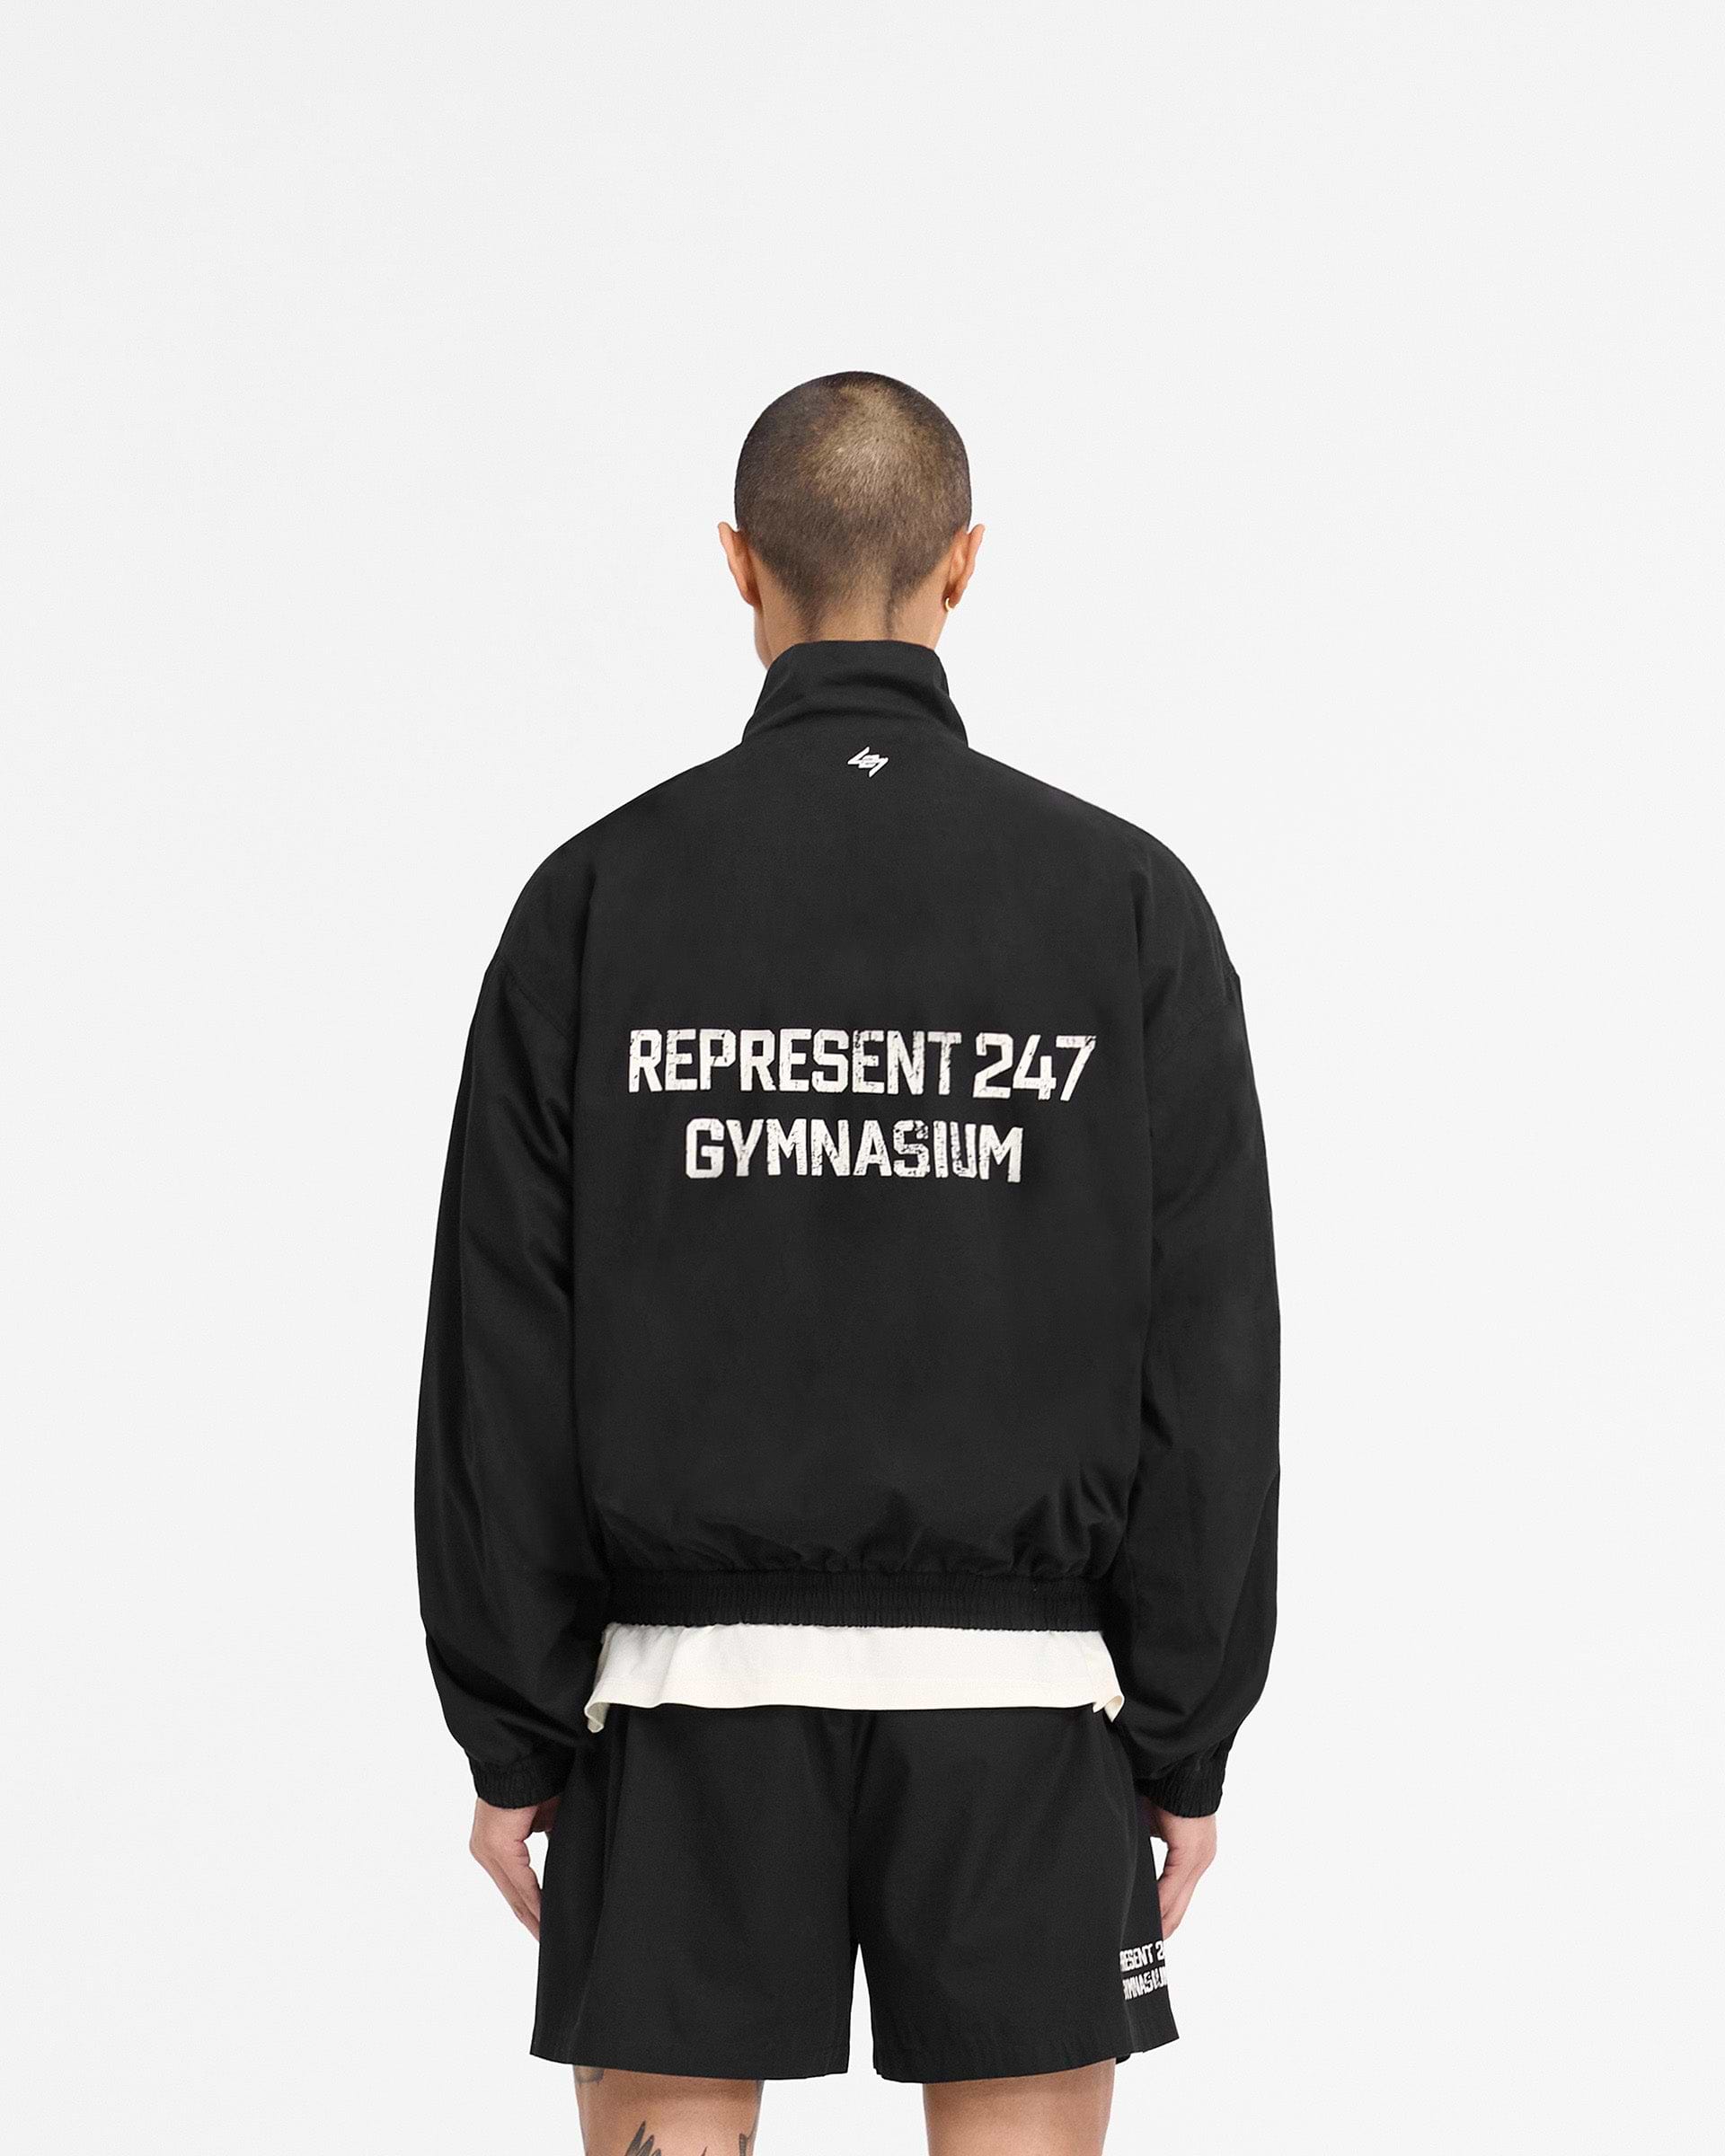 247 Represent Gymnasium Track Jacket - Off Black